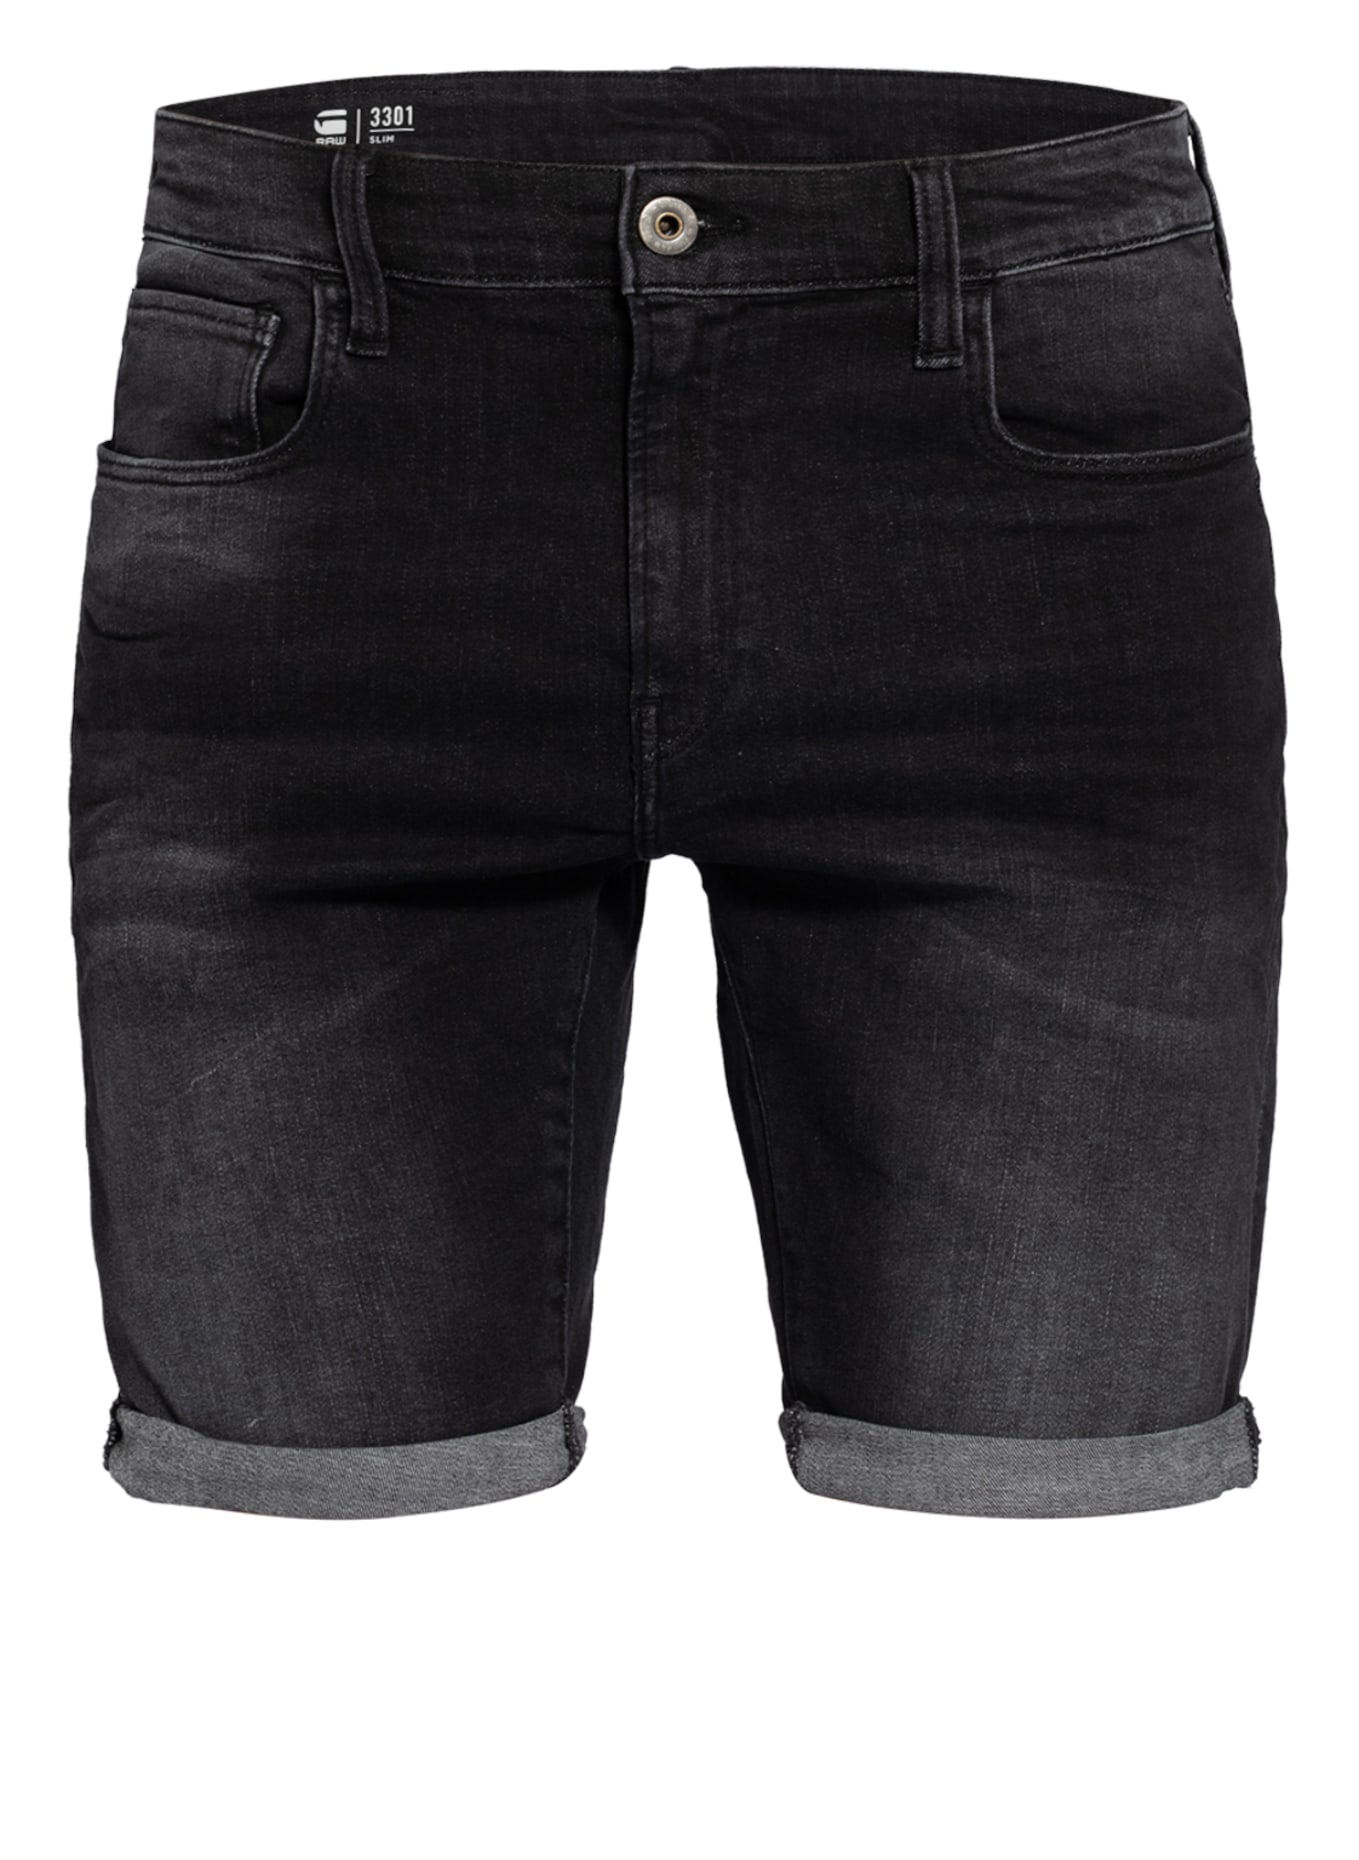 G-Star RAW Denim shorts 3301 slim fit, Color: 9887 Medium Aged Grey (Image 1)